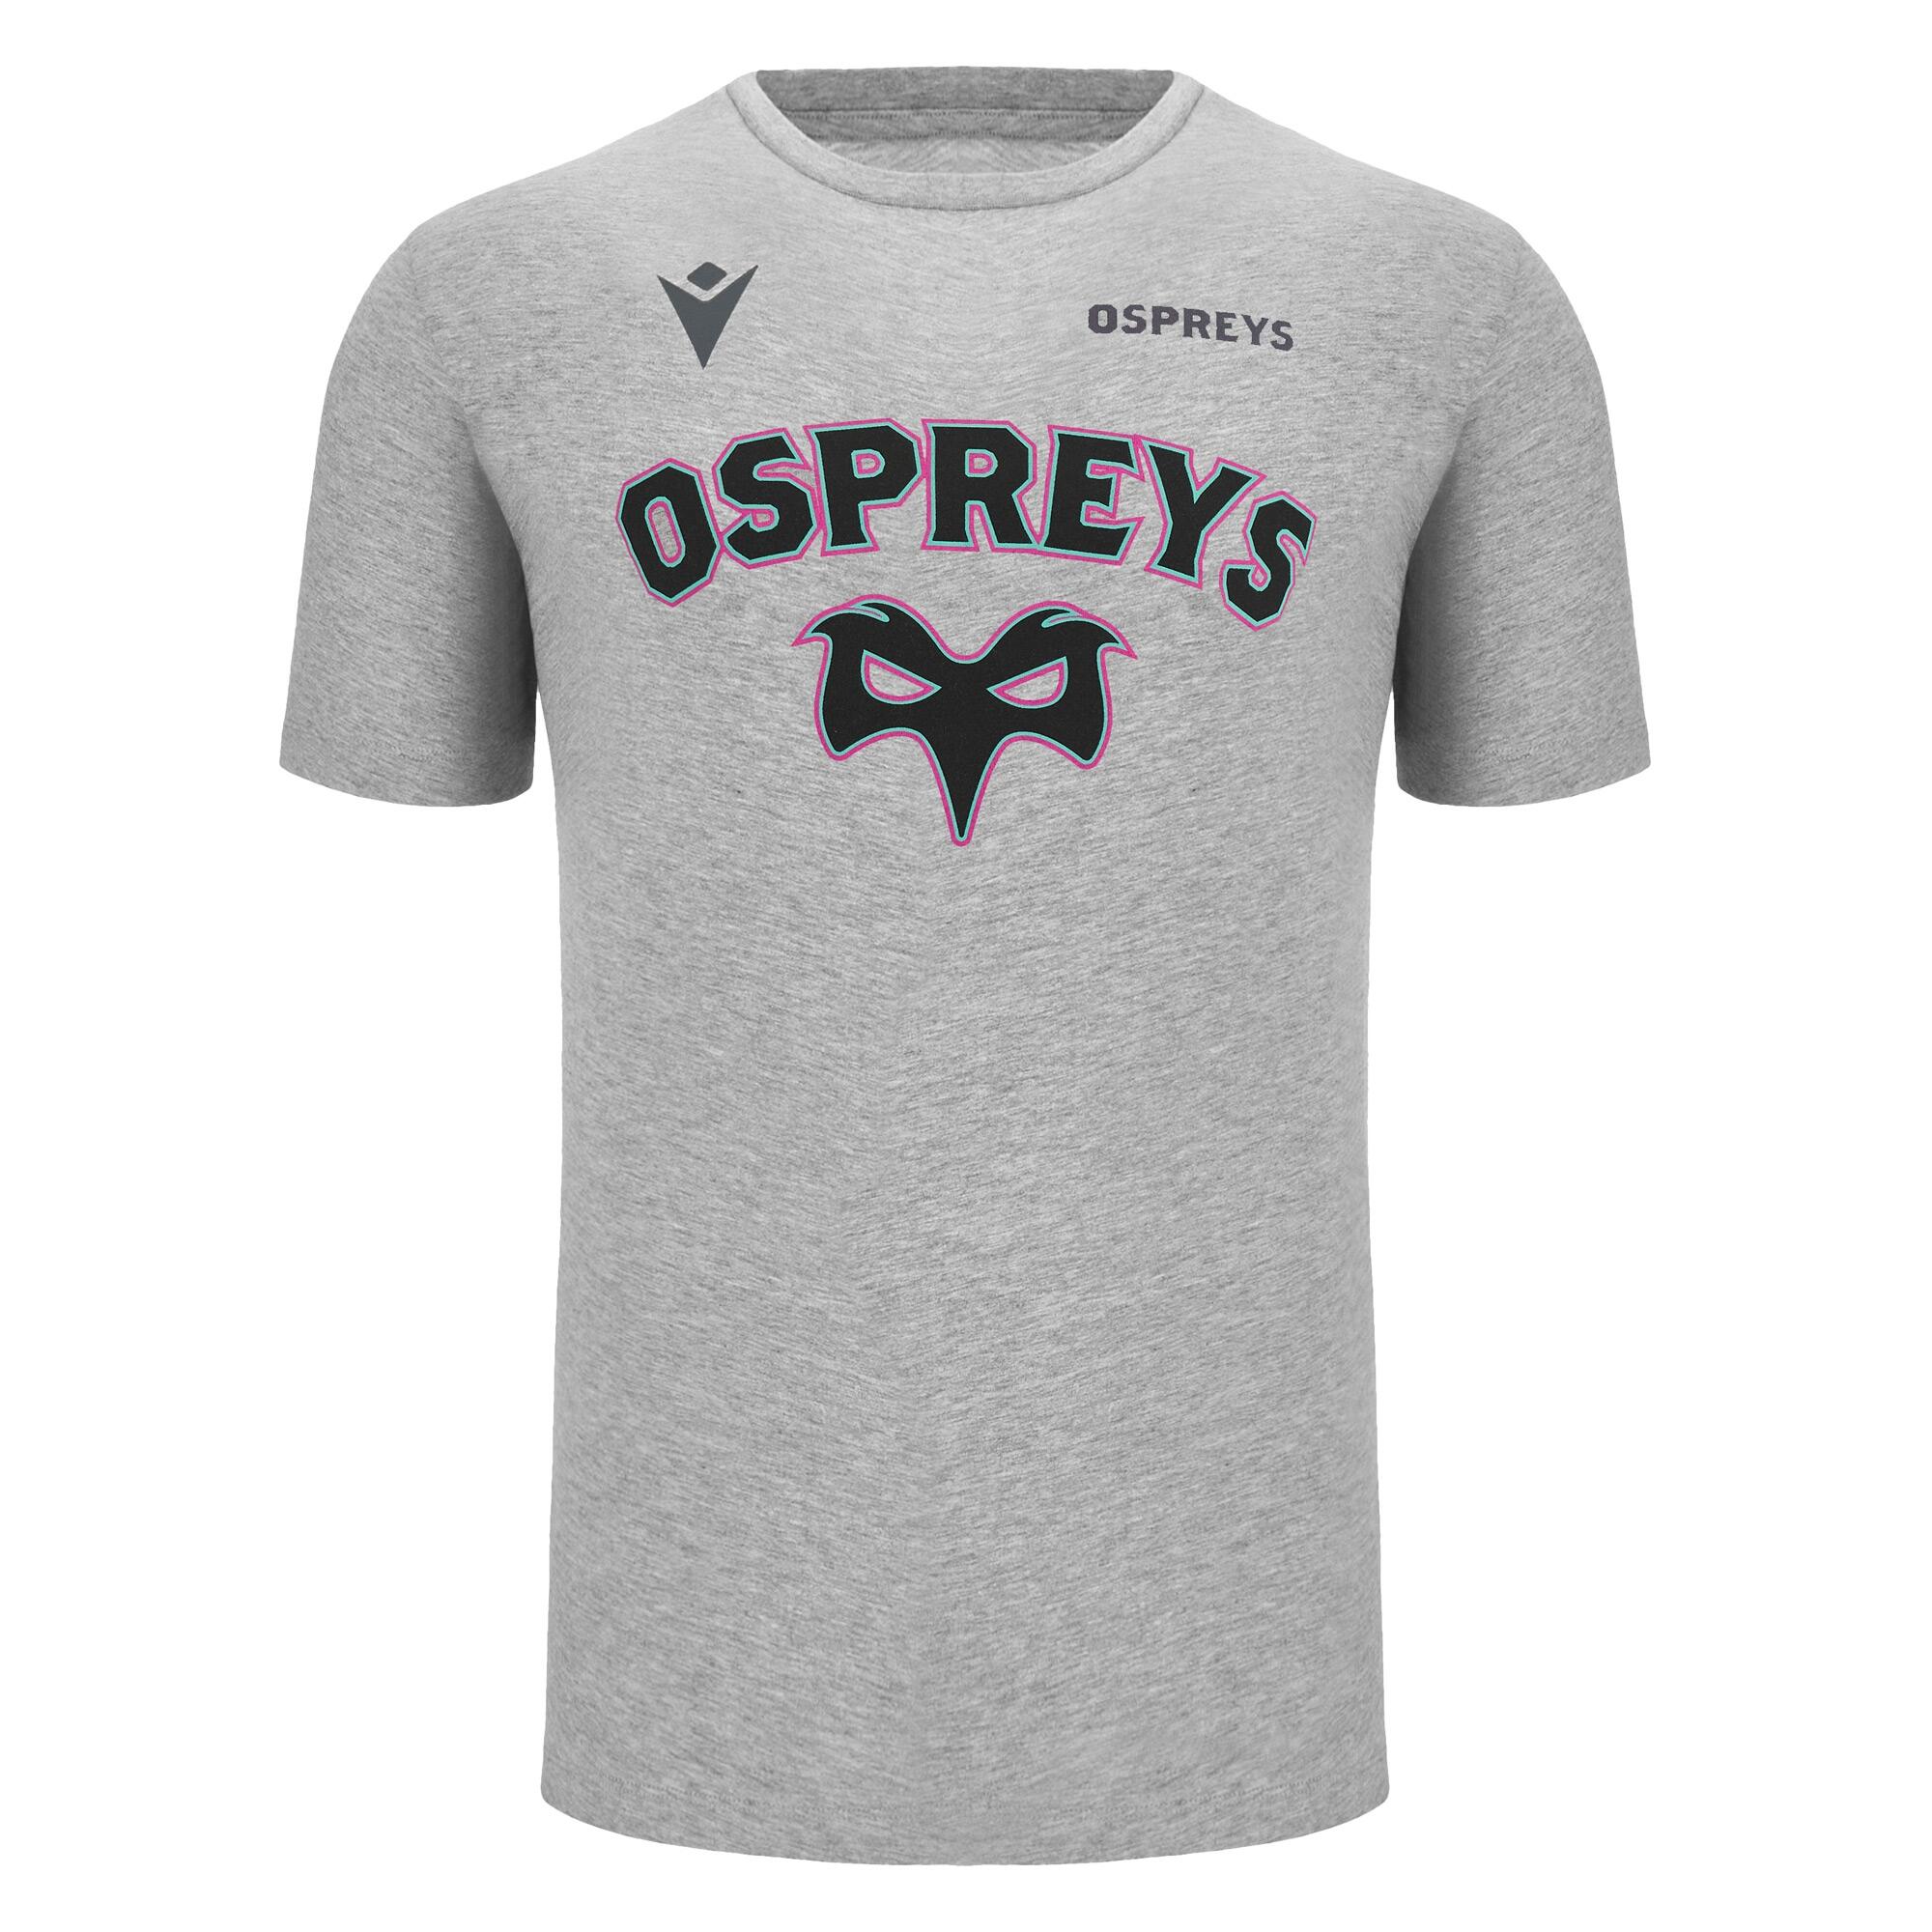 Macron Ospreys 23/24 Mens Leisure Cotton T Shirt 1/3